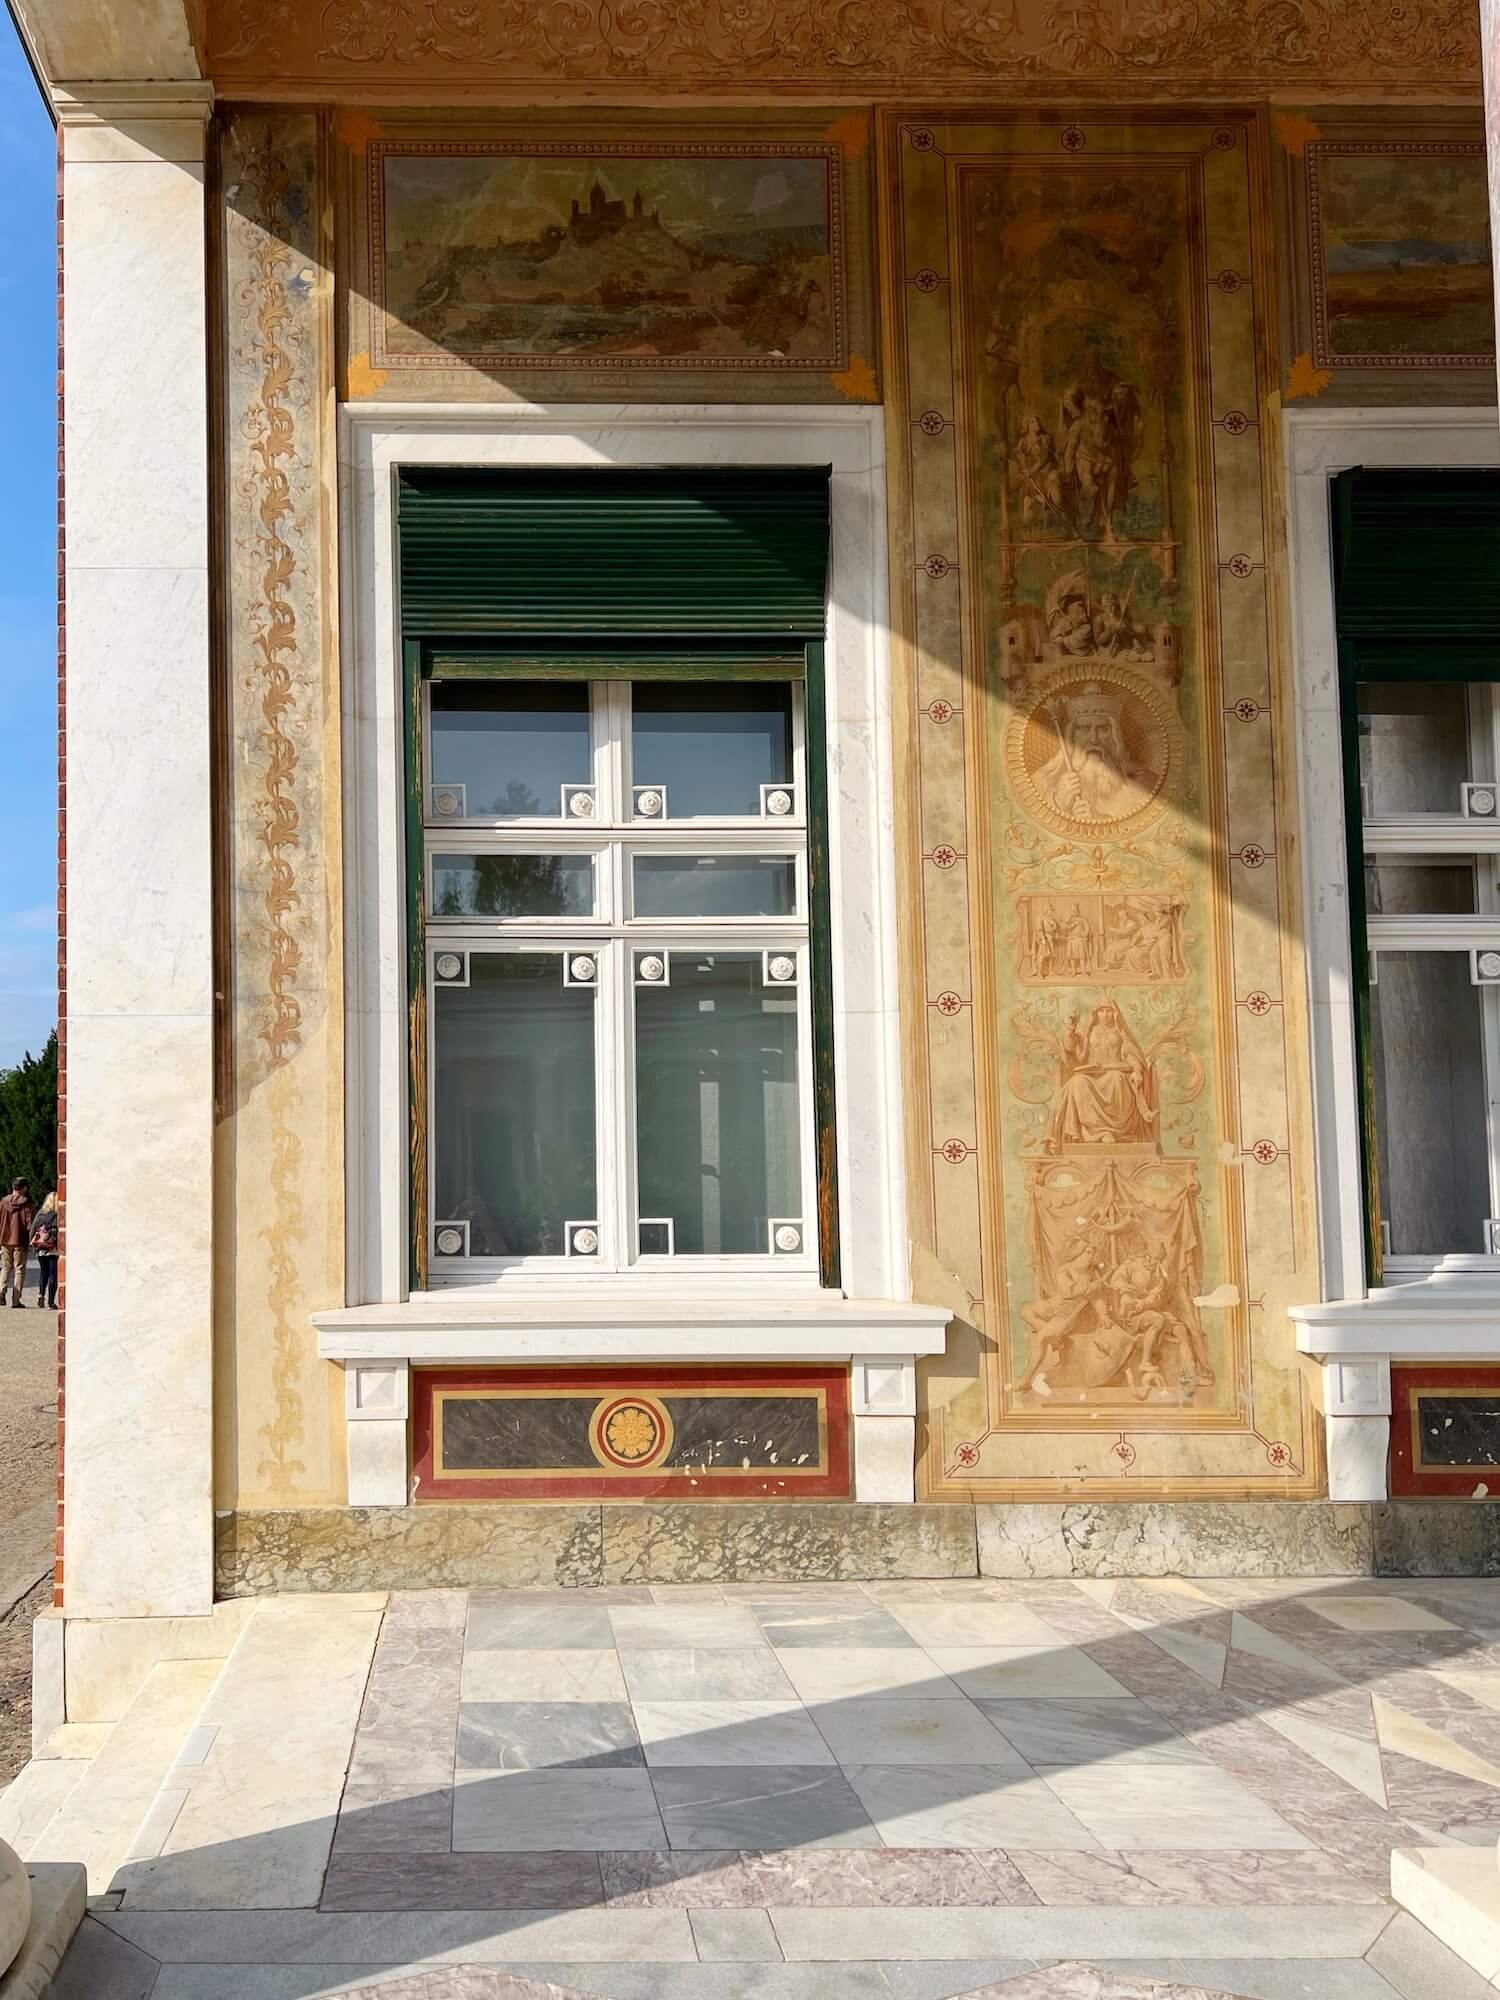 marble house colonade window and frescoes.JPG